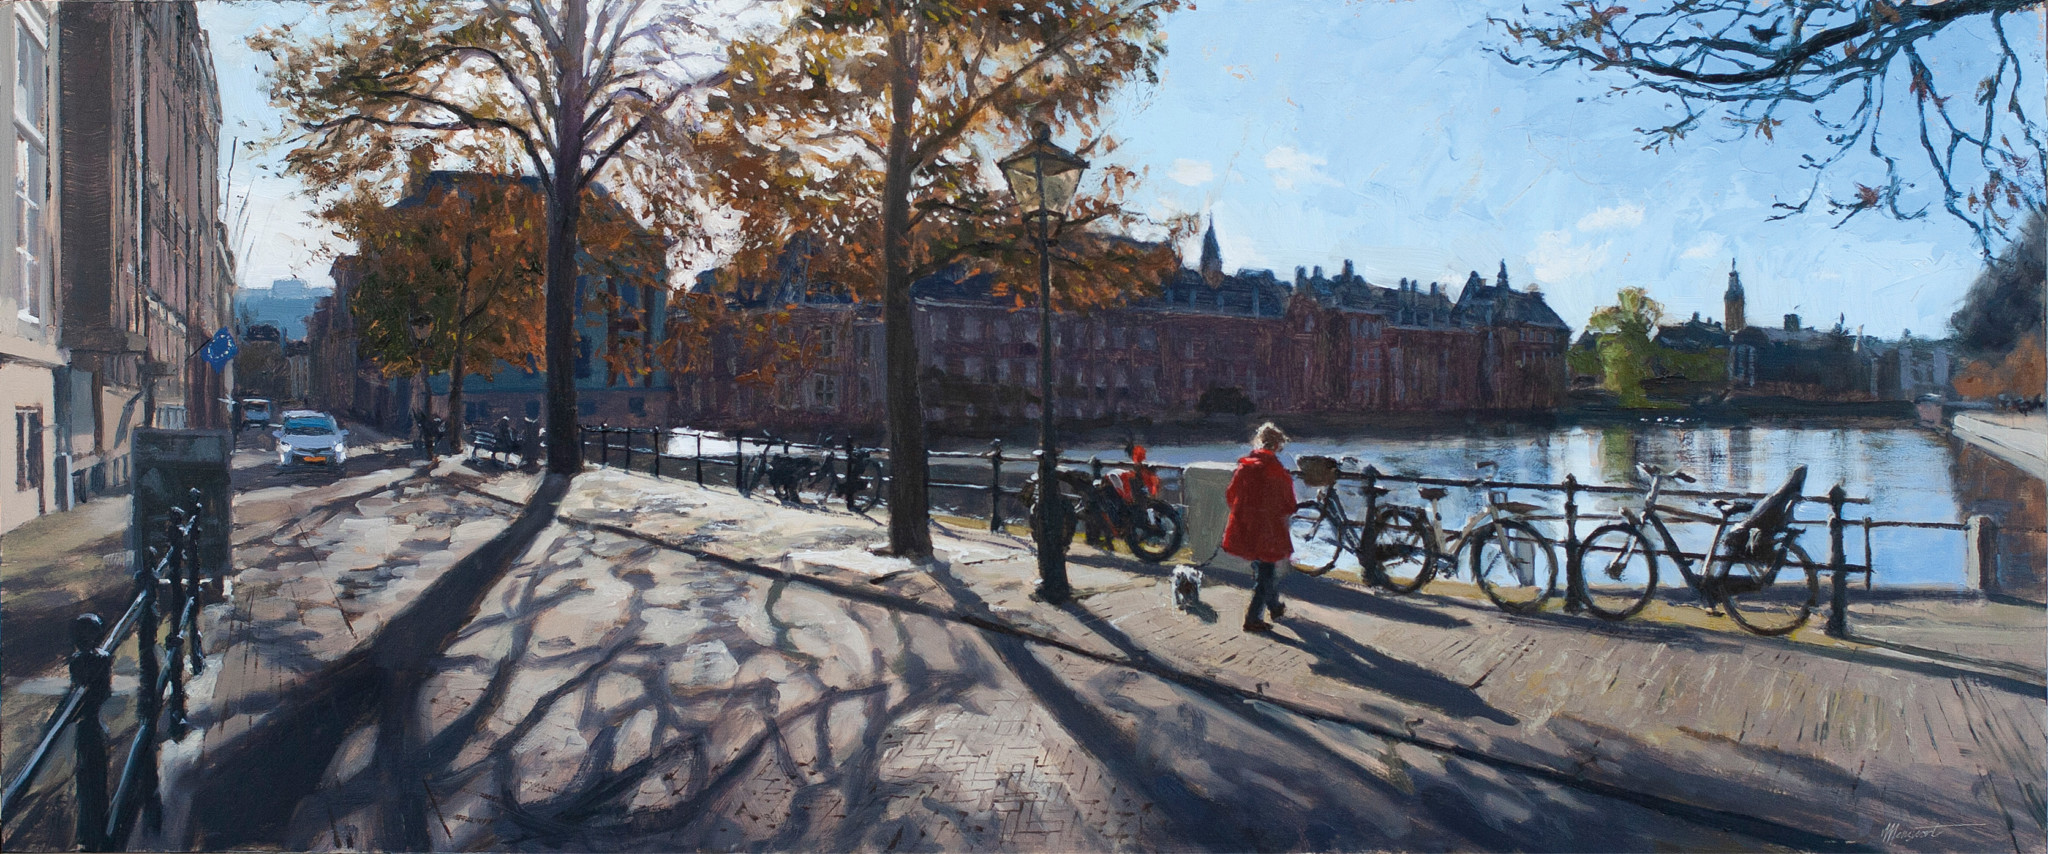 schilderij stadsgezicht den haag hofvijver herfst tegenlicht schaduwen